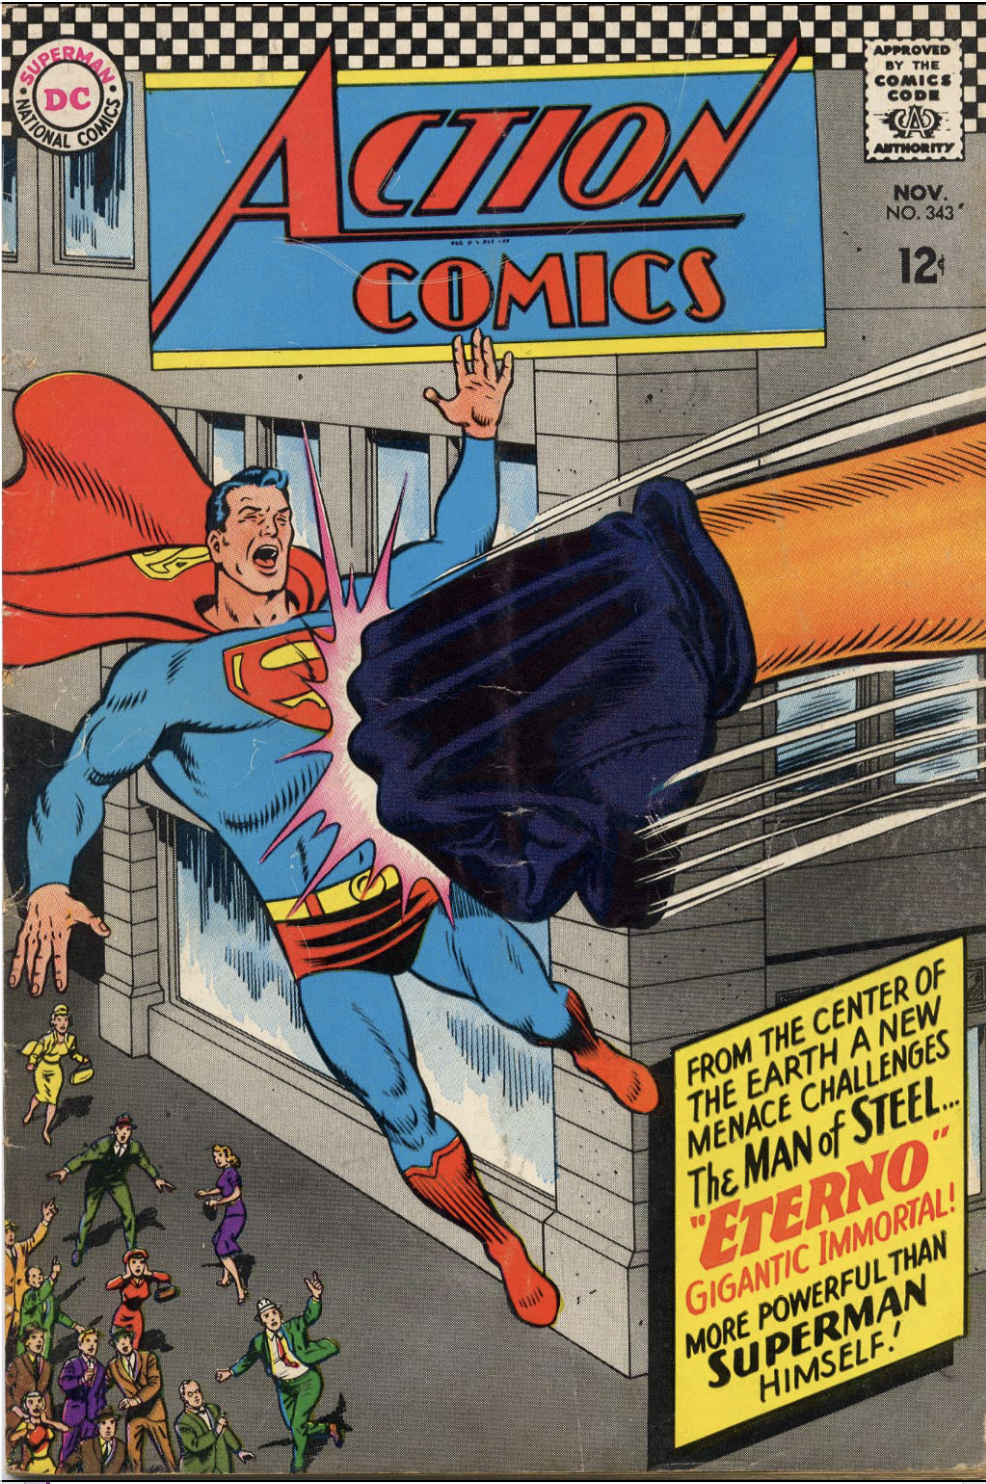 A Giant Among Supermen (Action Comics 343)